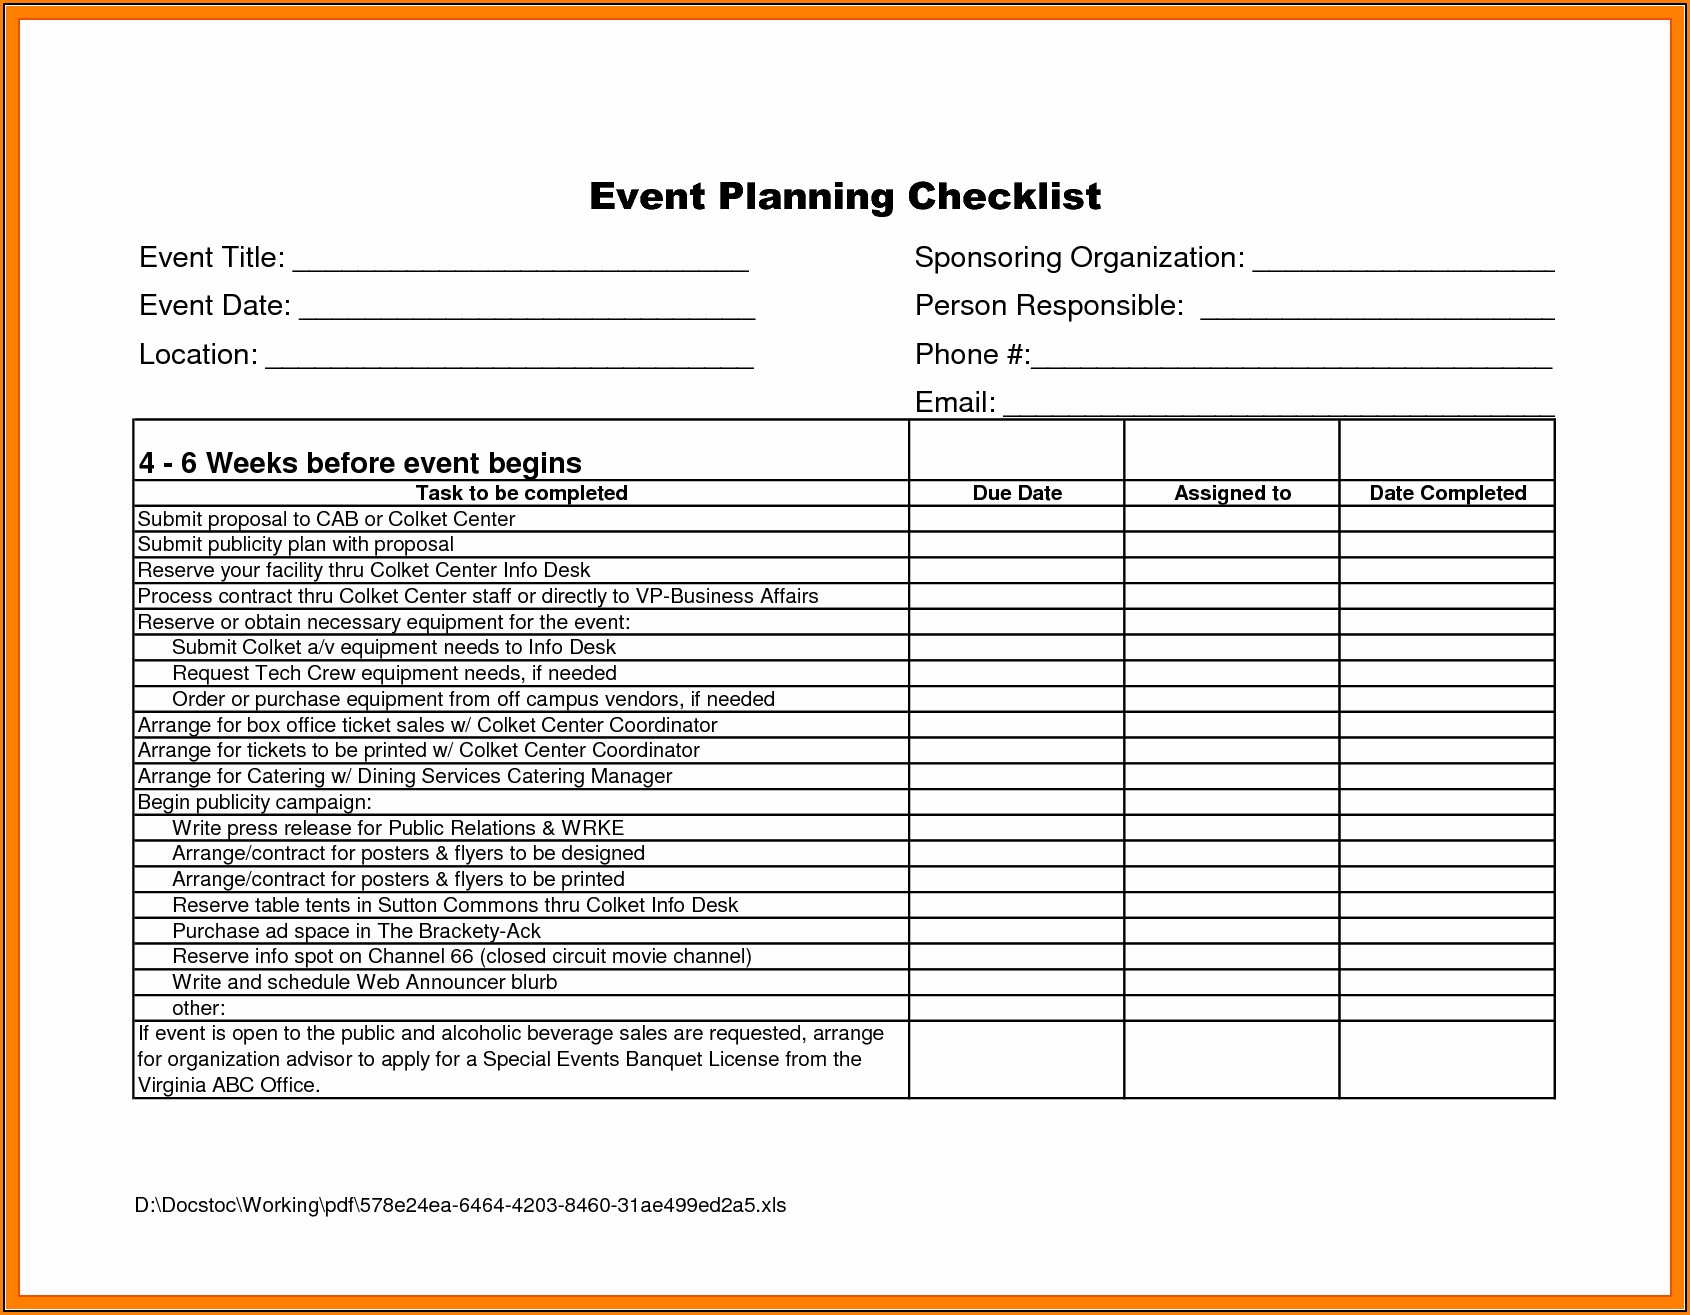 Event Planning Checklist Template Excel